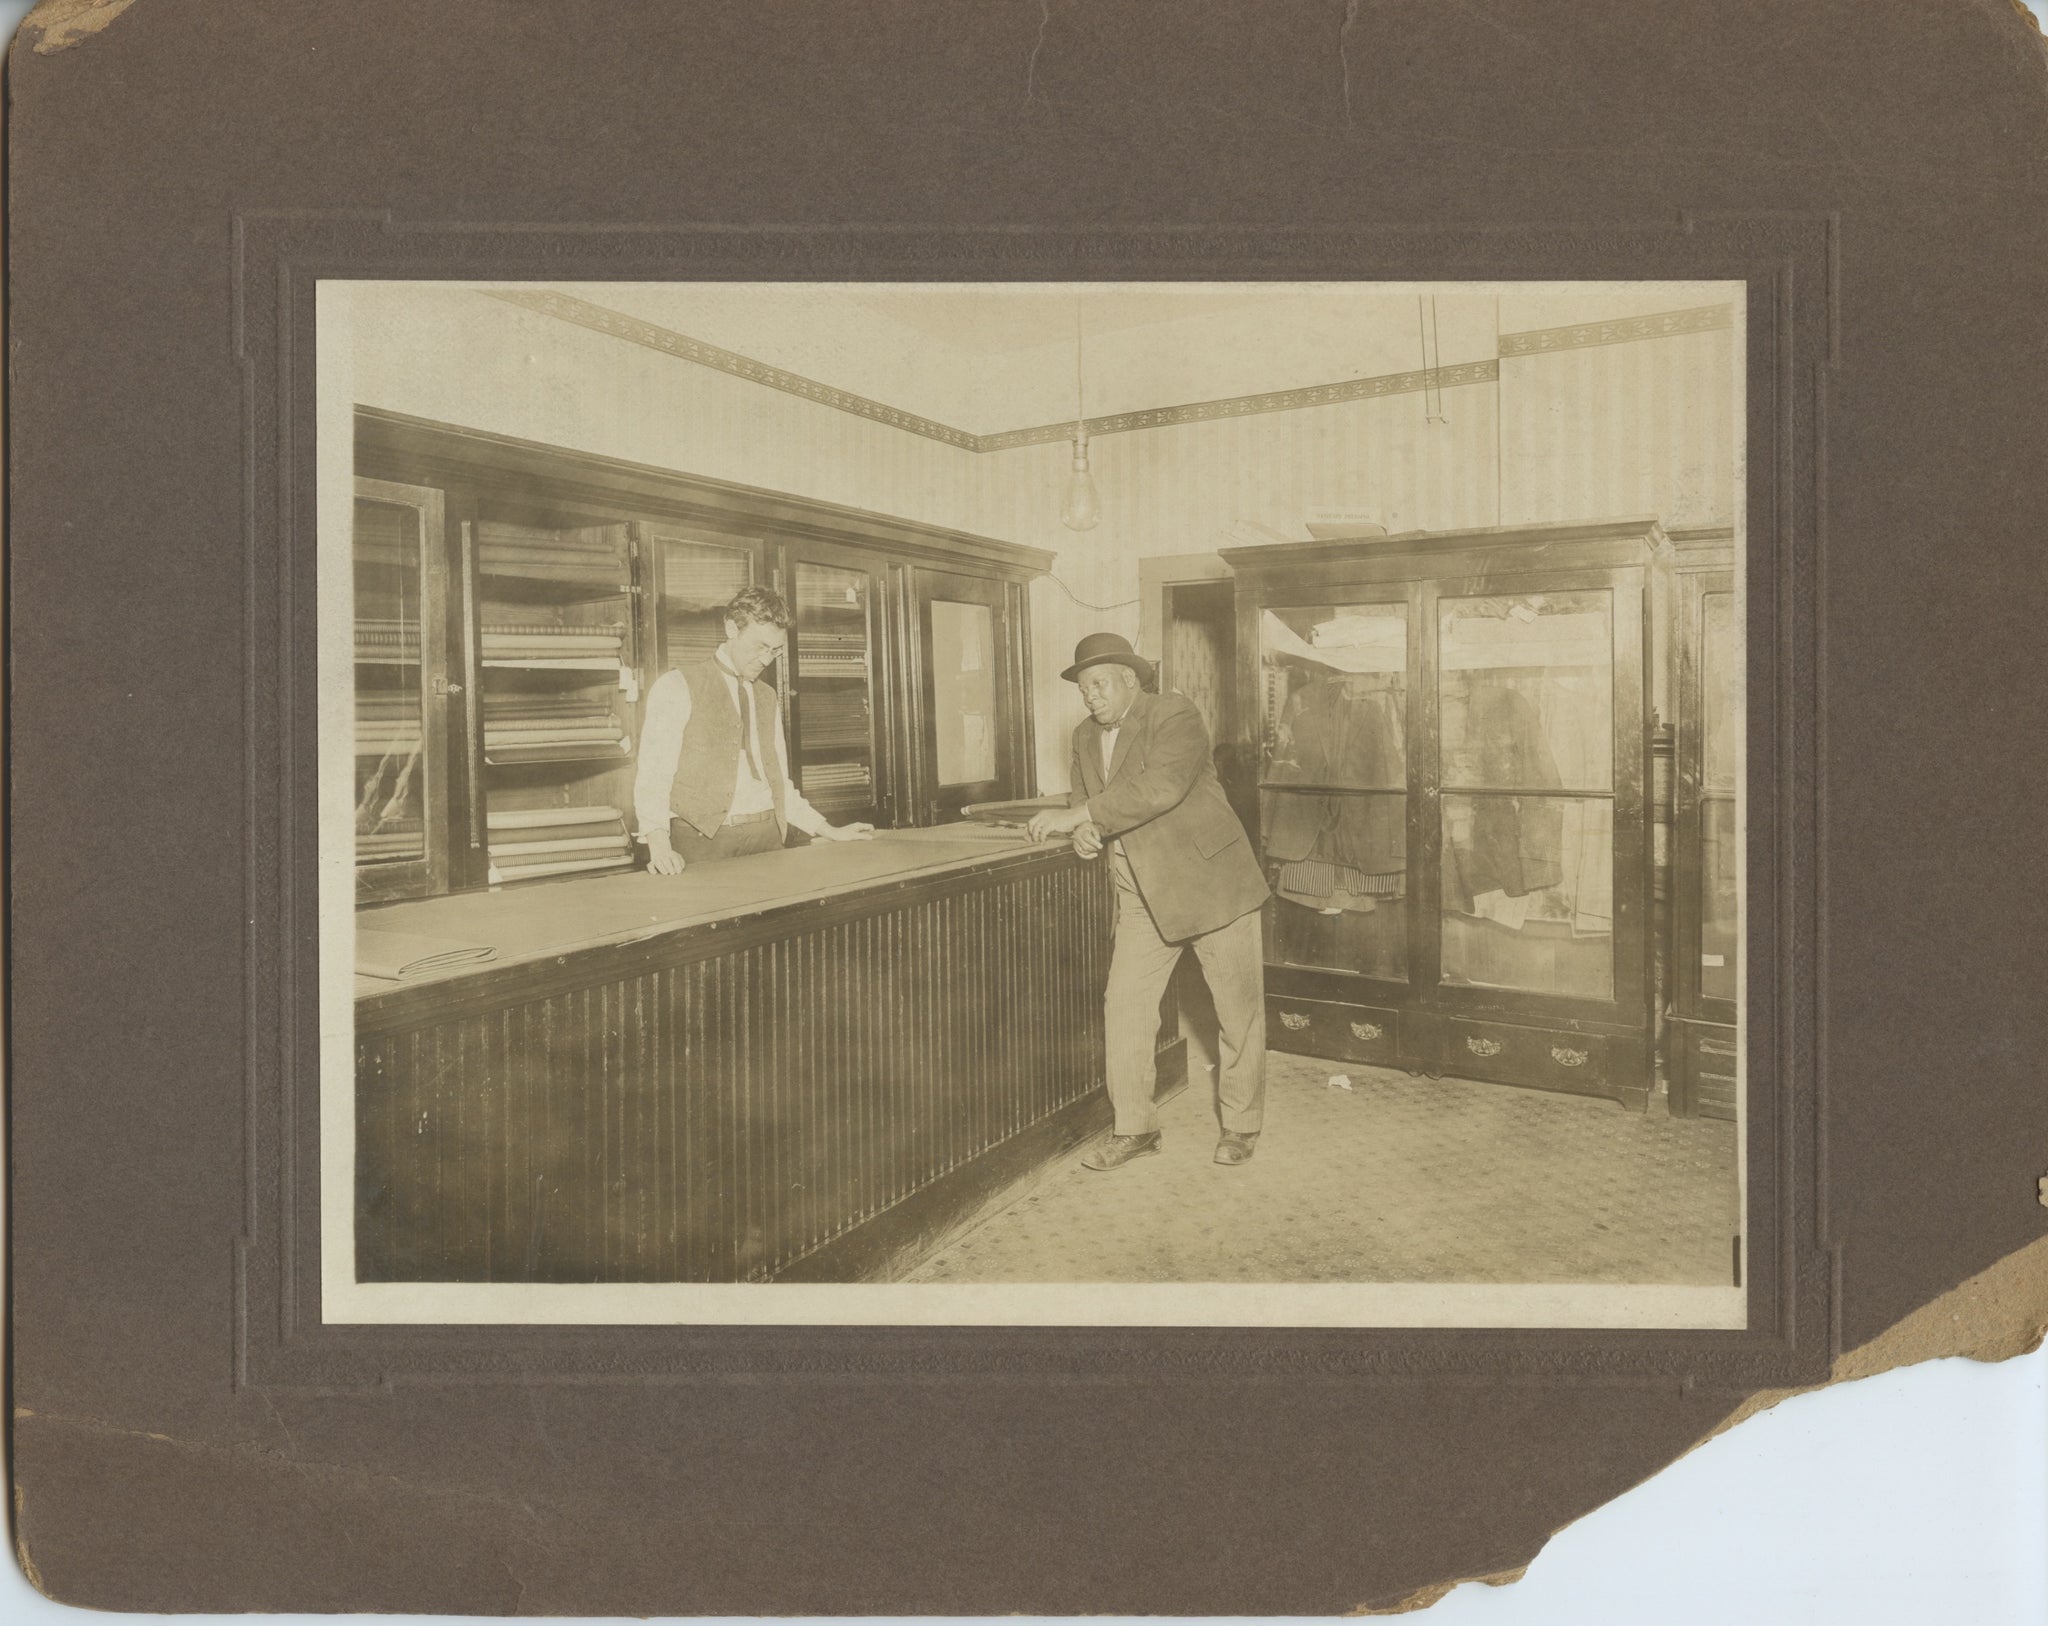 [Tailor's Shop] Original photograph, ca. 1900